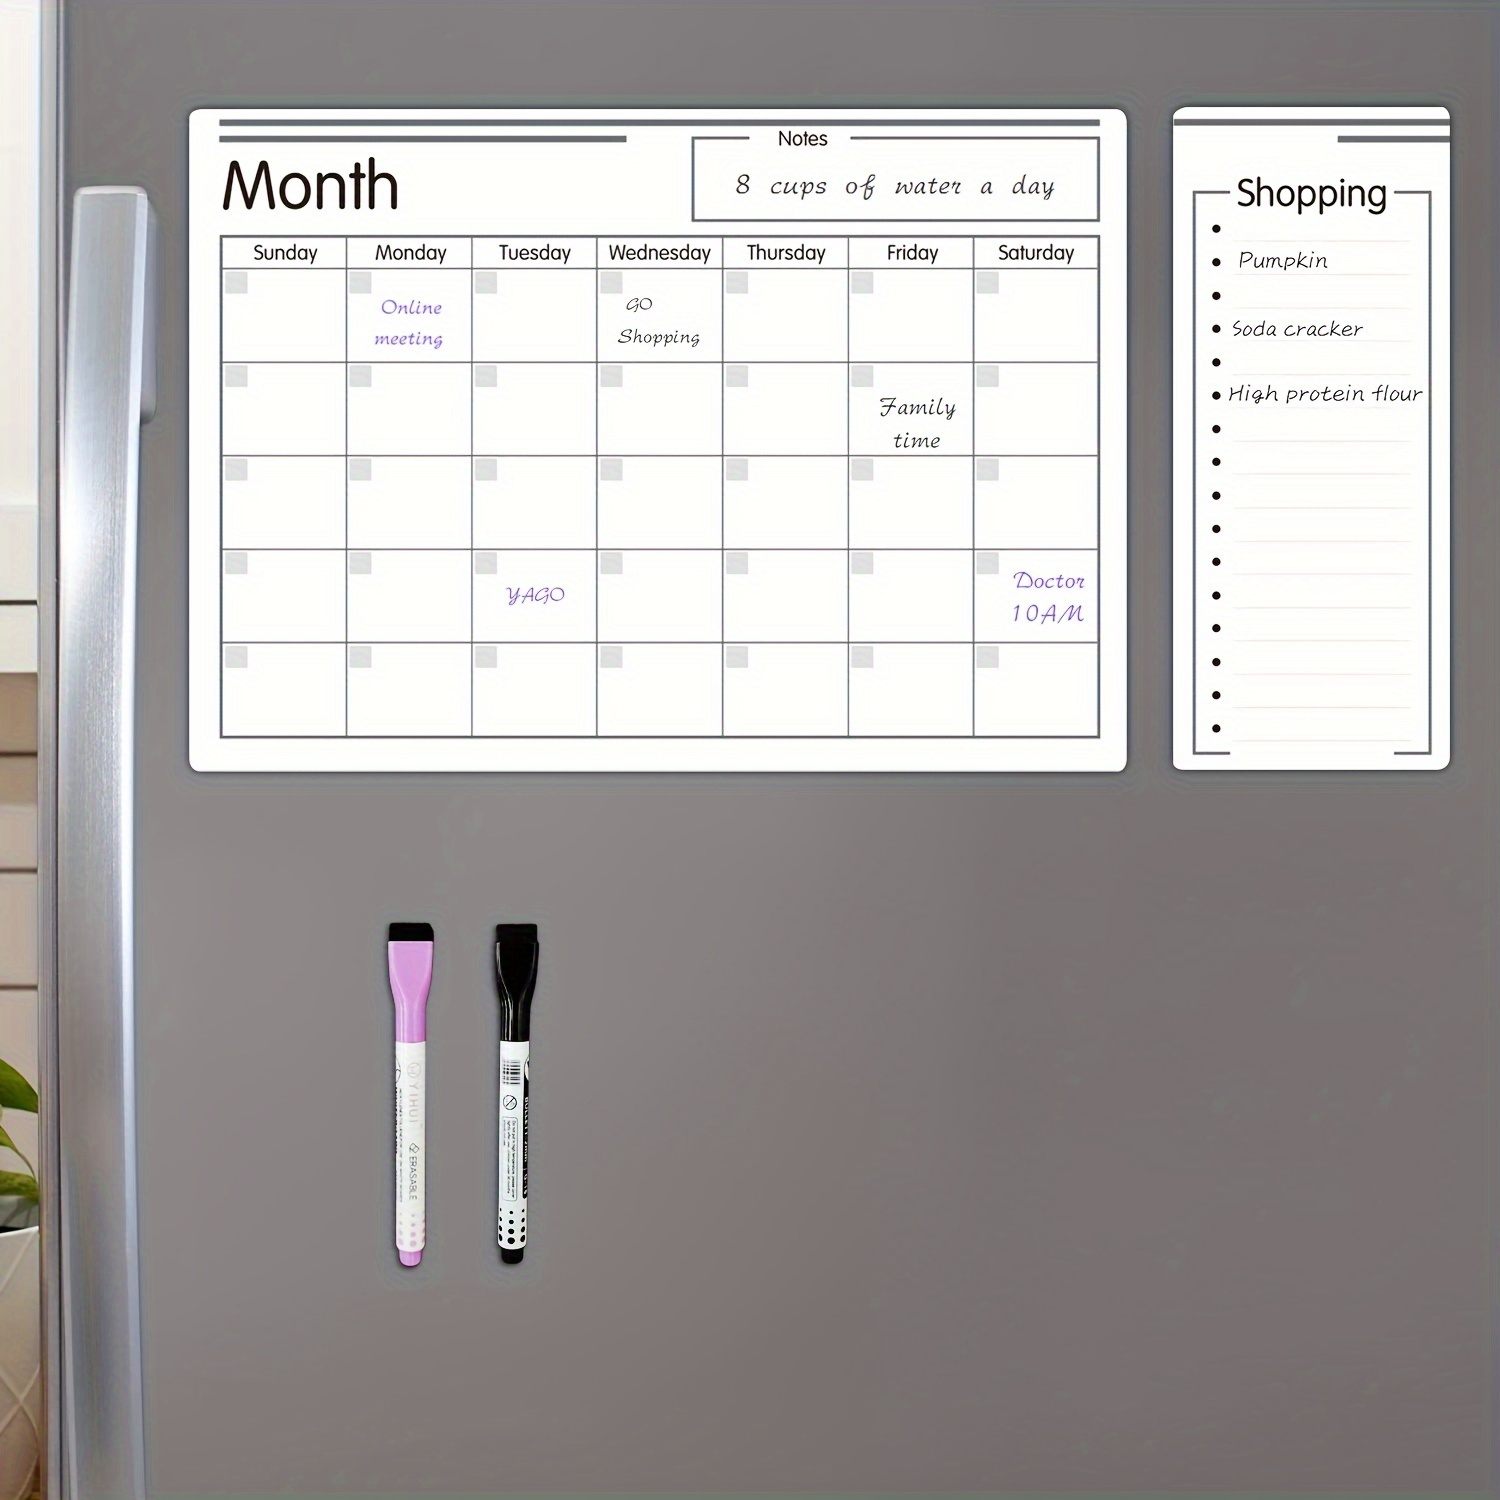 D-FantiX Calendario magnético de borrado en seco, paquete de 4 calendarios  magnéticos para refrigerador, lista de comestibles mensual, semanal